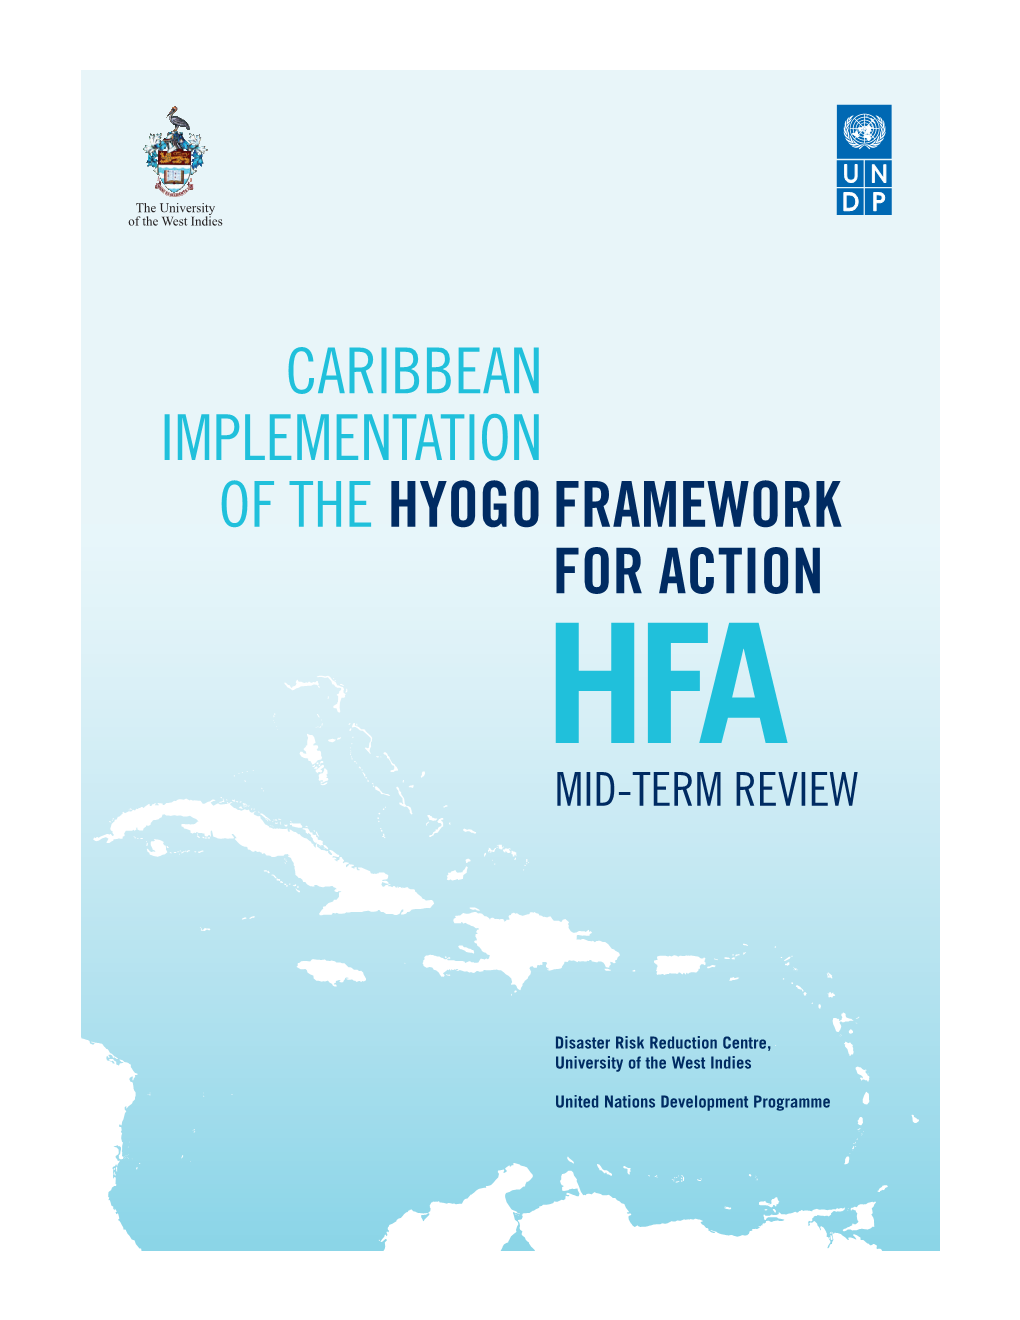 Caribbean Implementation of the Hyogoframework For